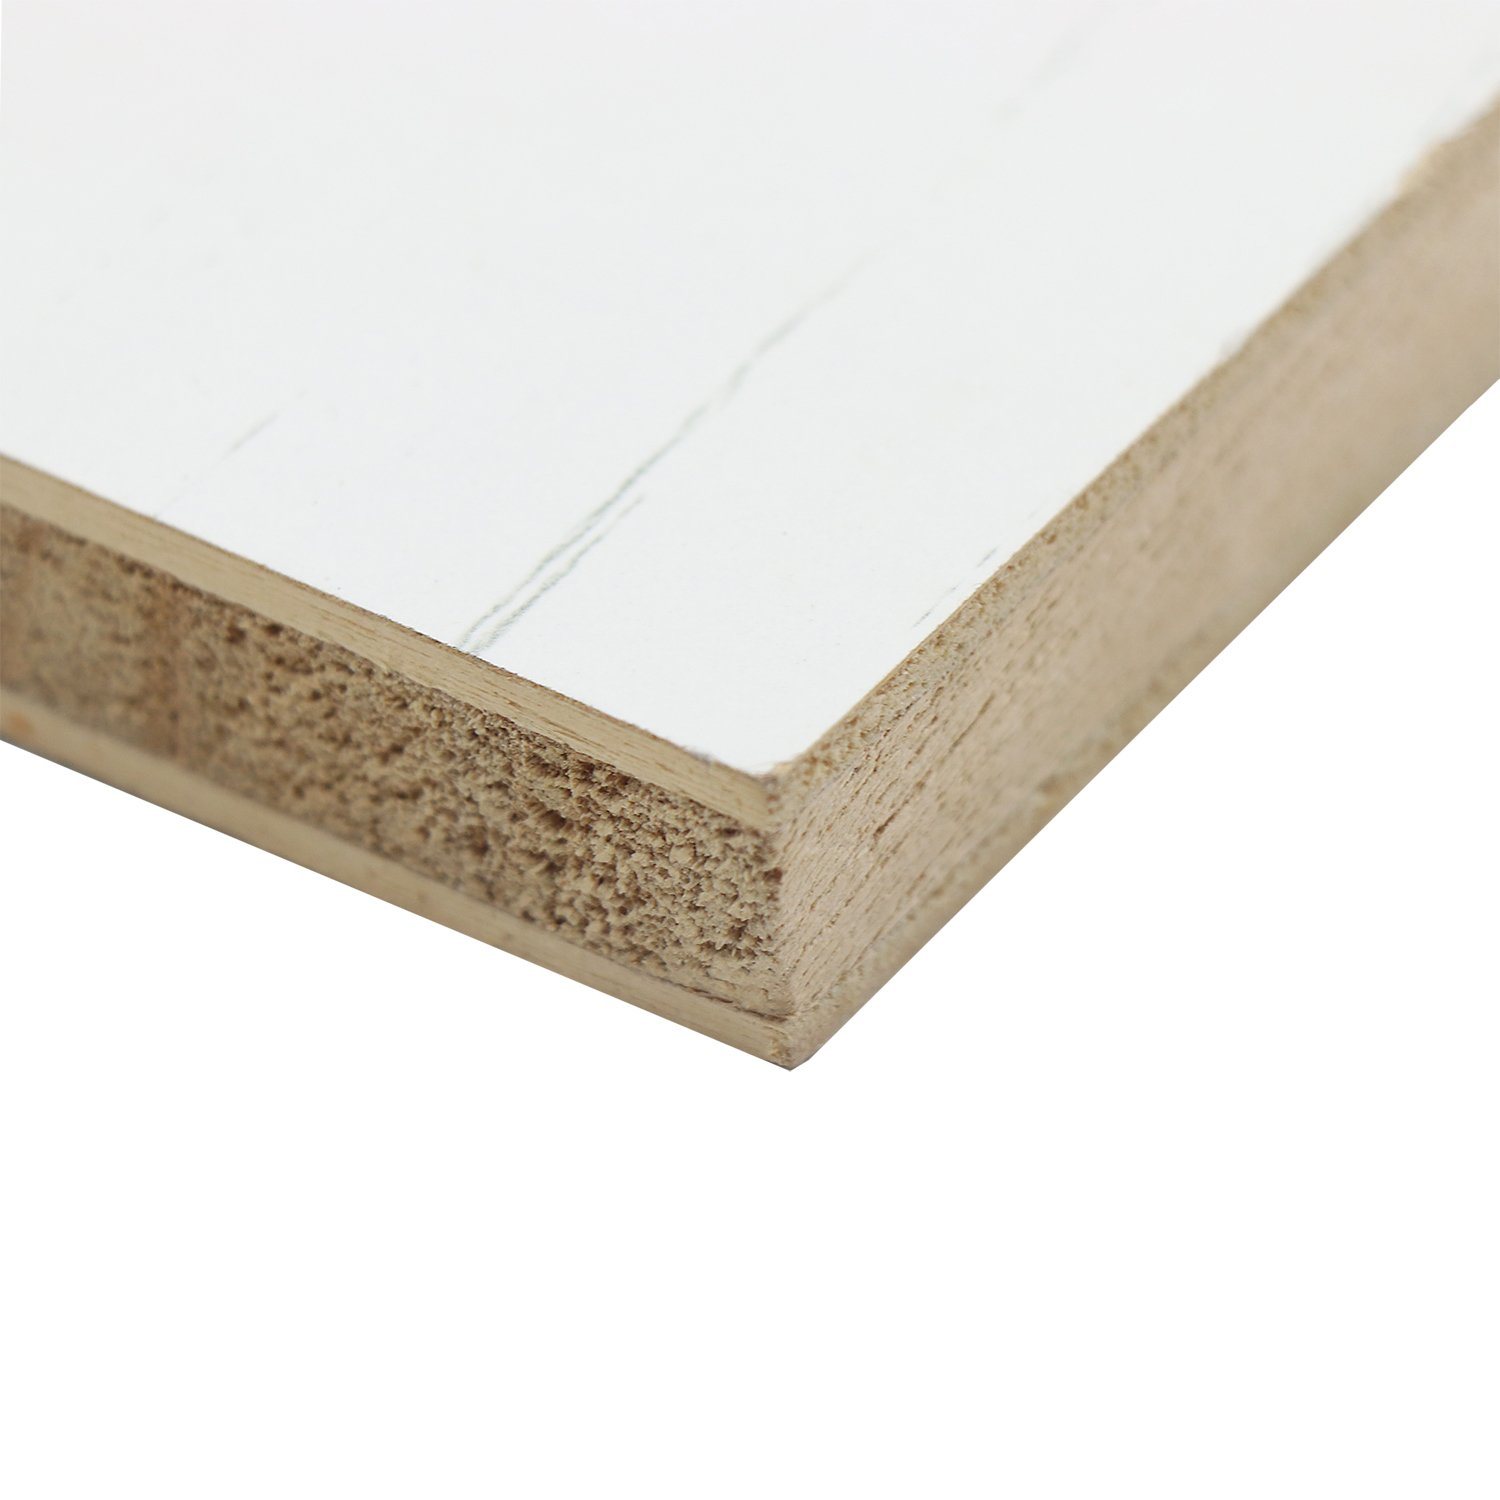 White Woodgrain Melamine Film Faced Plywood Laminated Plywood Board for Furniture